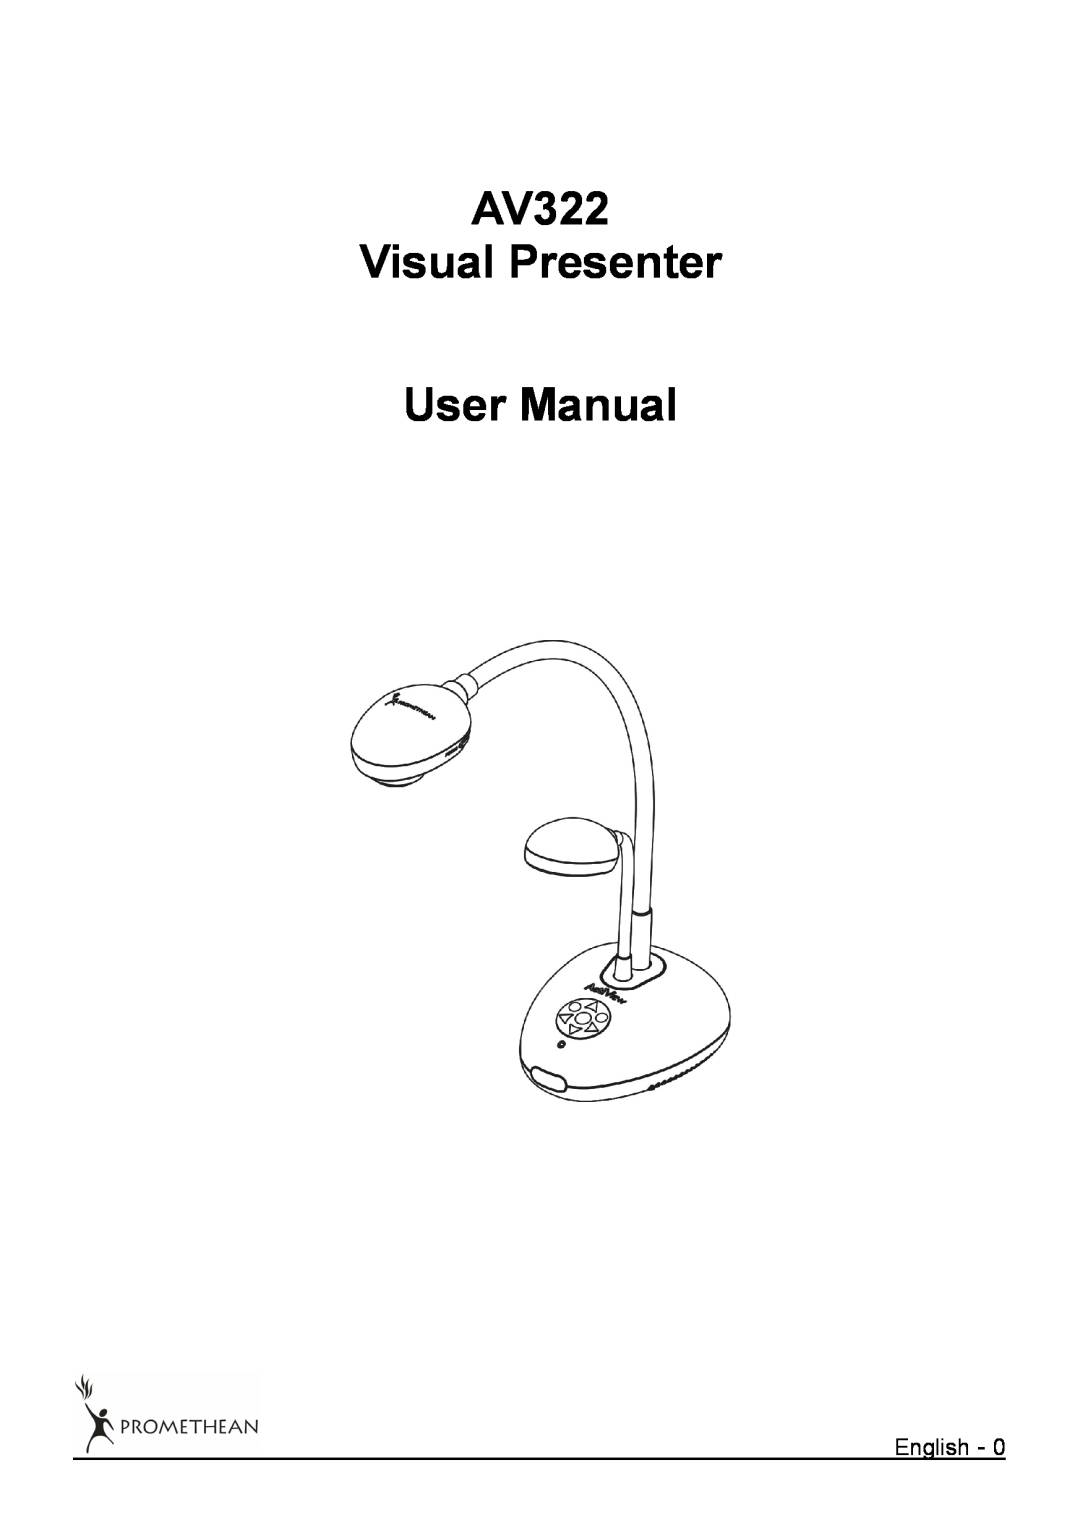 Promethean user manual AV322 Visual Presenter User Manual, English 